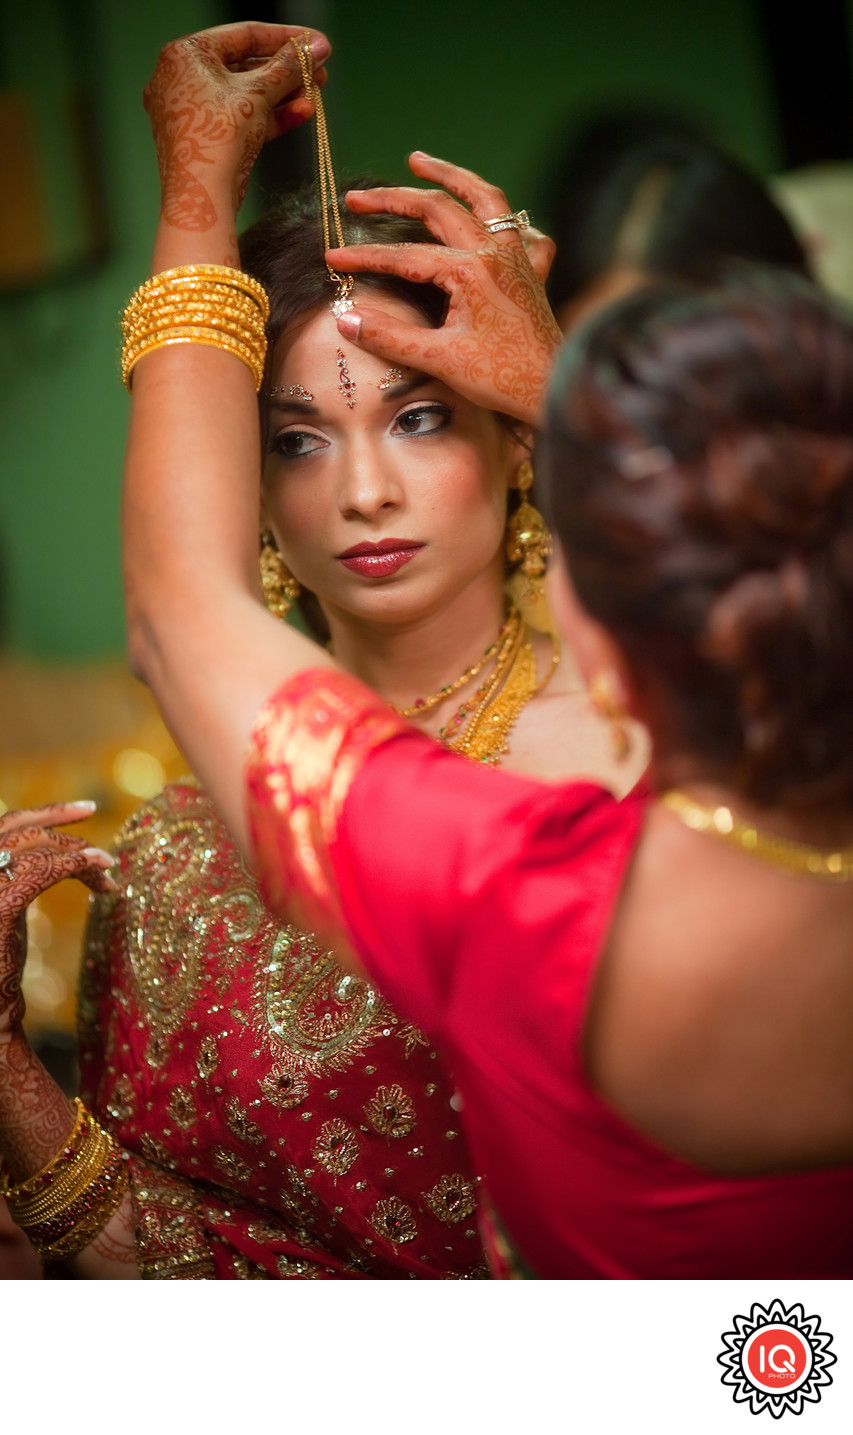 Indian Bride Preparing